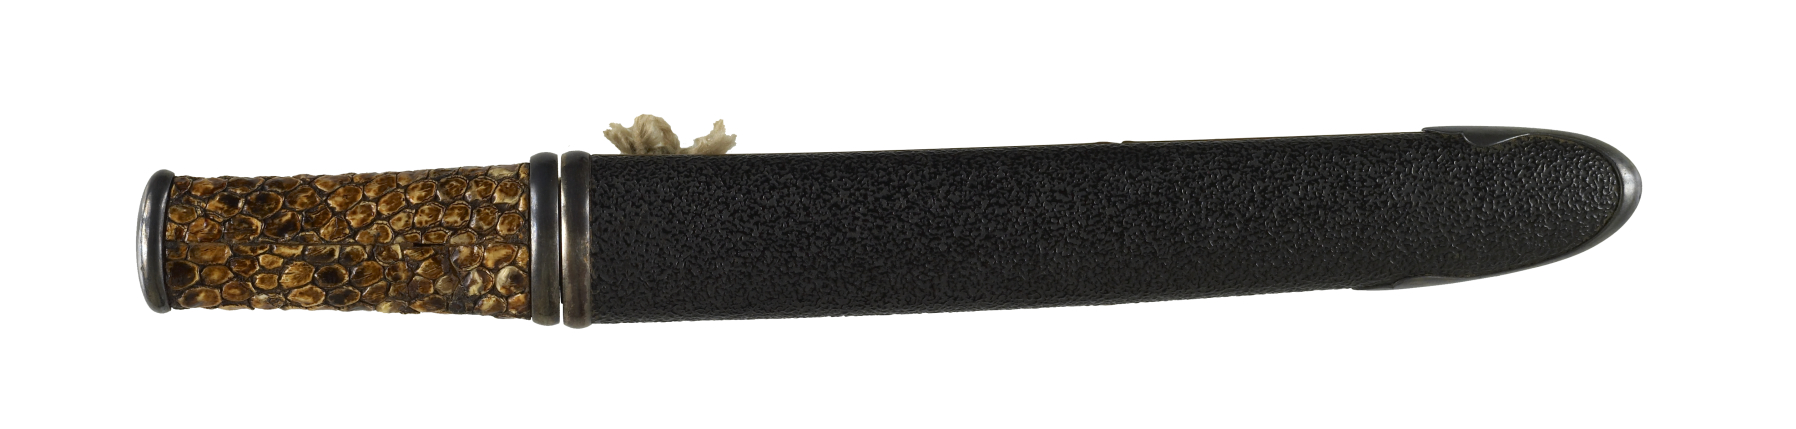 Image for Dagger (aikuchi) with snakeskin handle, imitation bamboo and leather saya (includes 51.1153.1-51.1153.2)